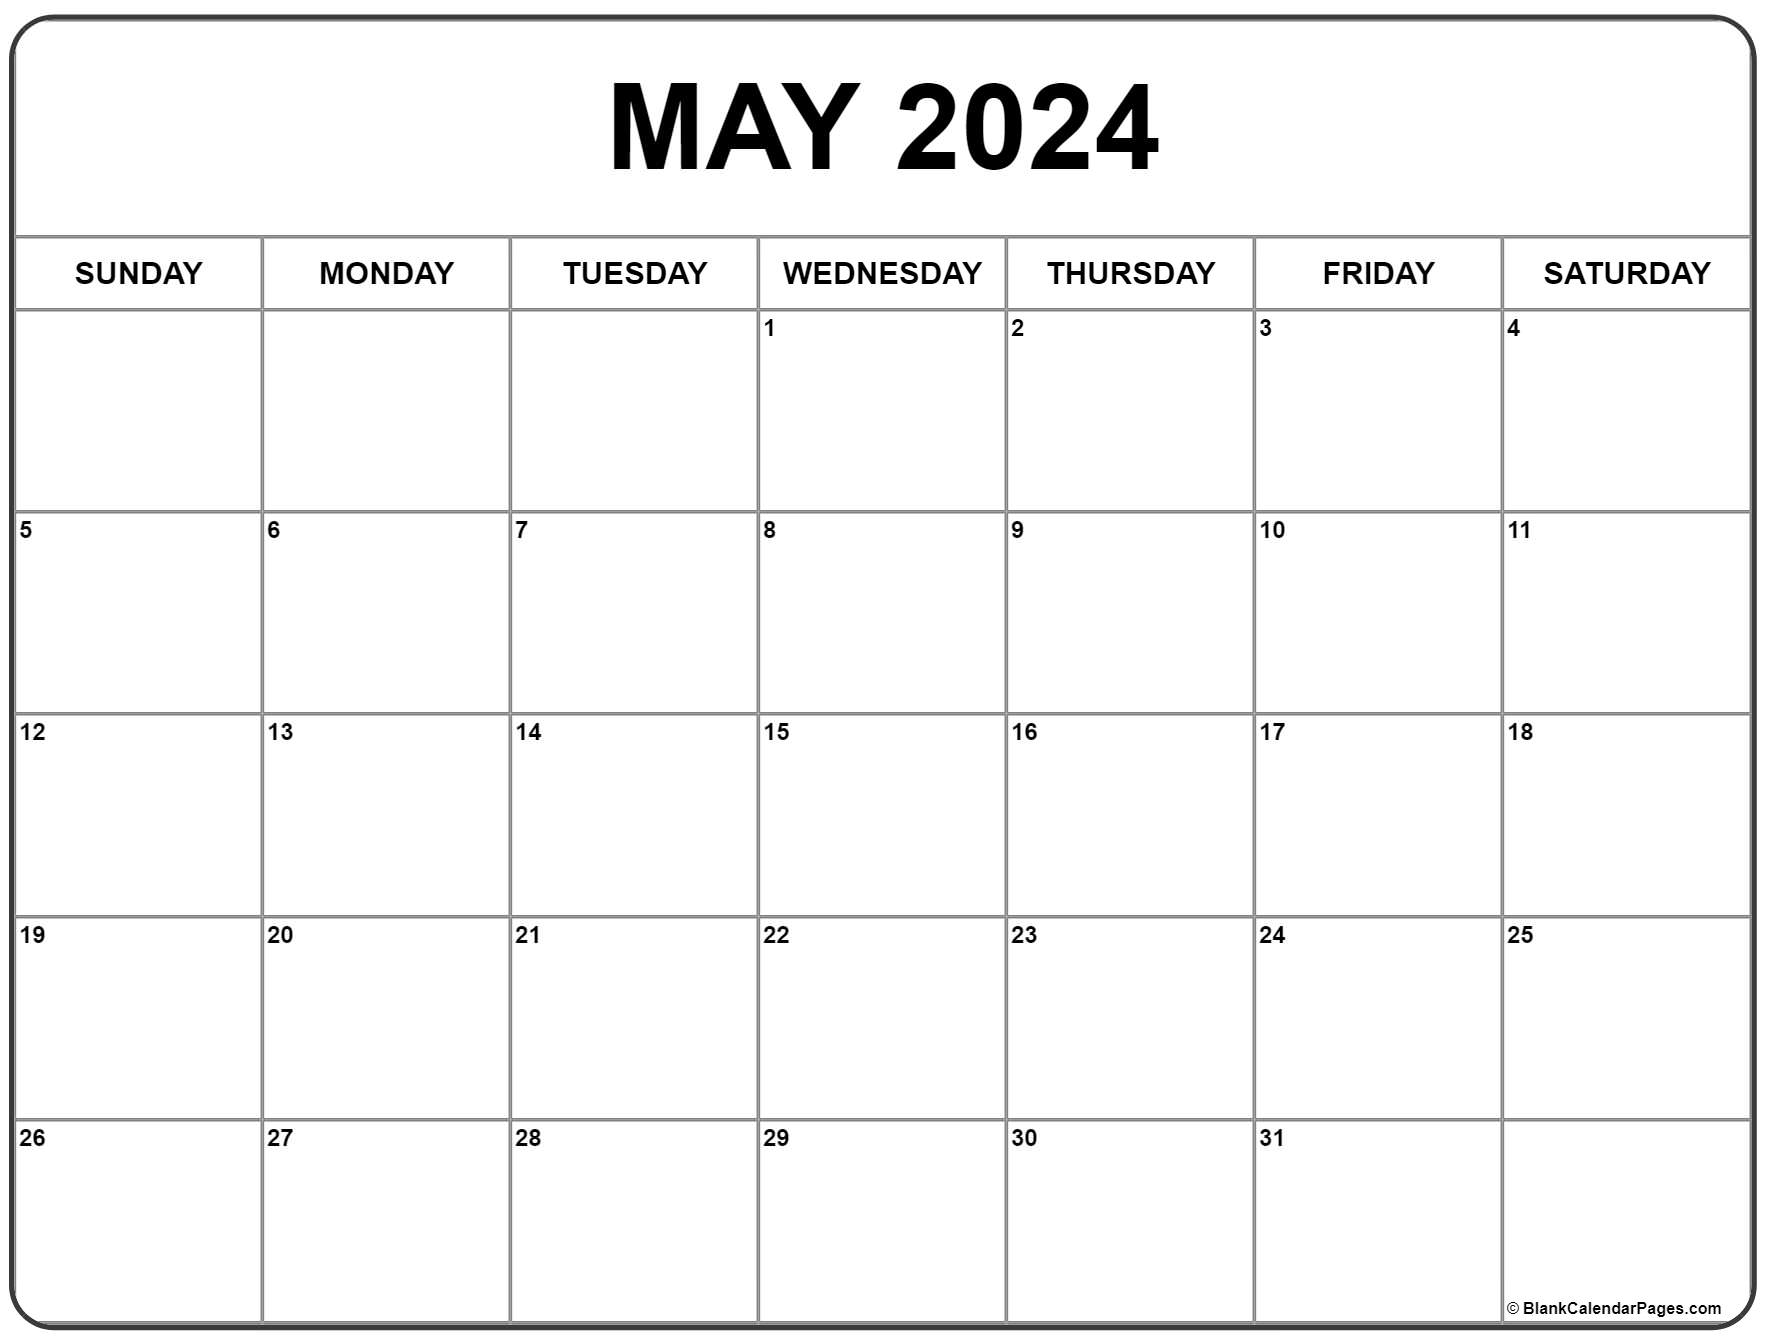 May 2024 Calendar | Free Printable Calendar for Free Printable Calendar For May 2024